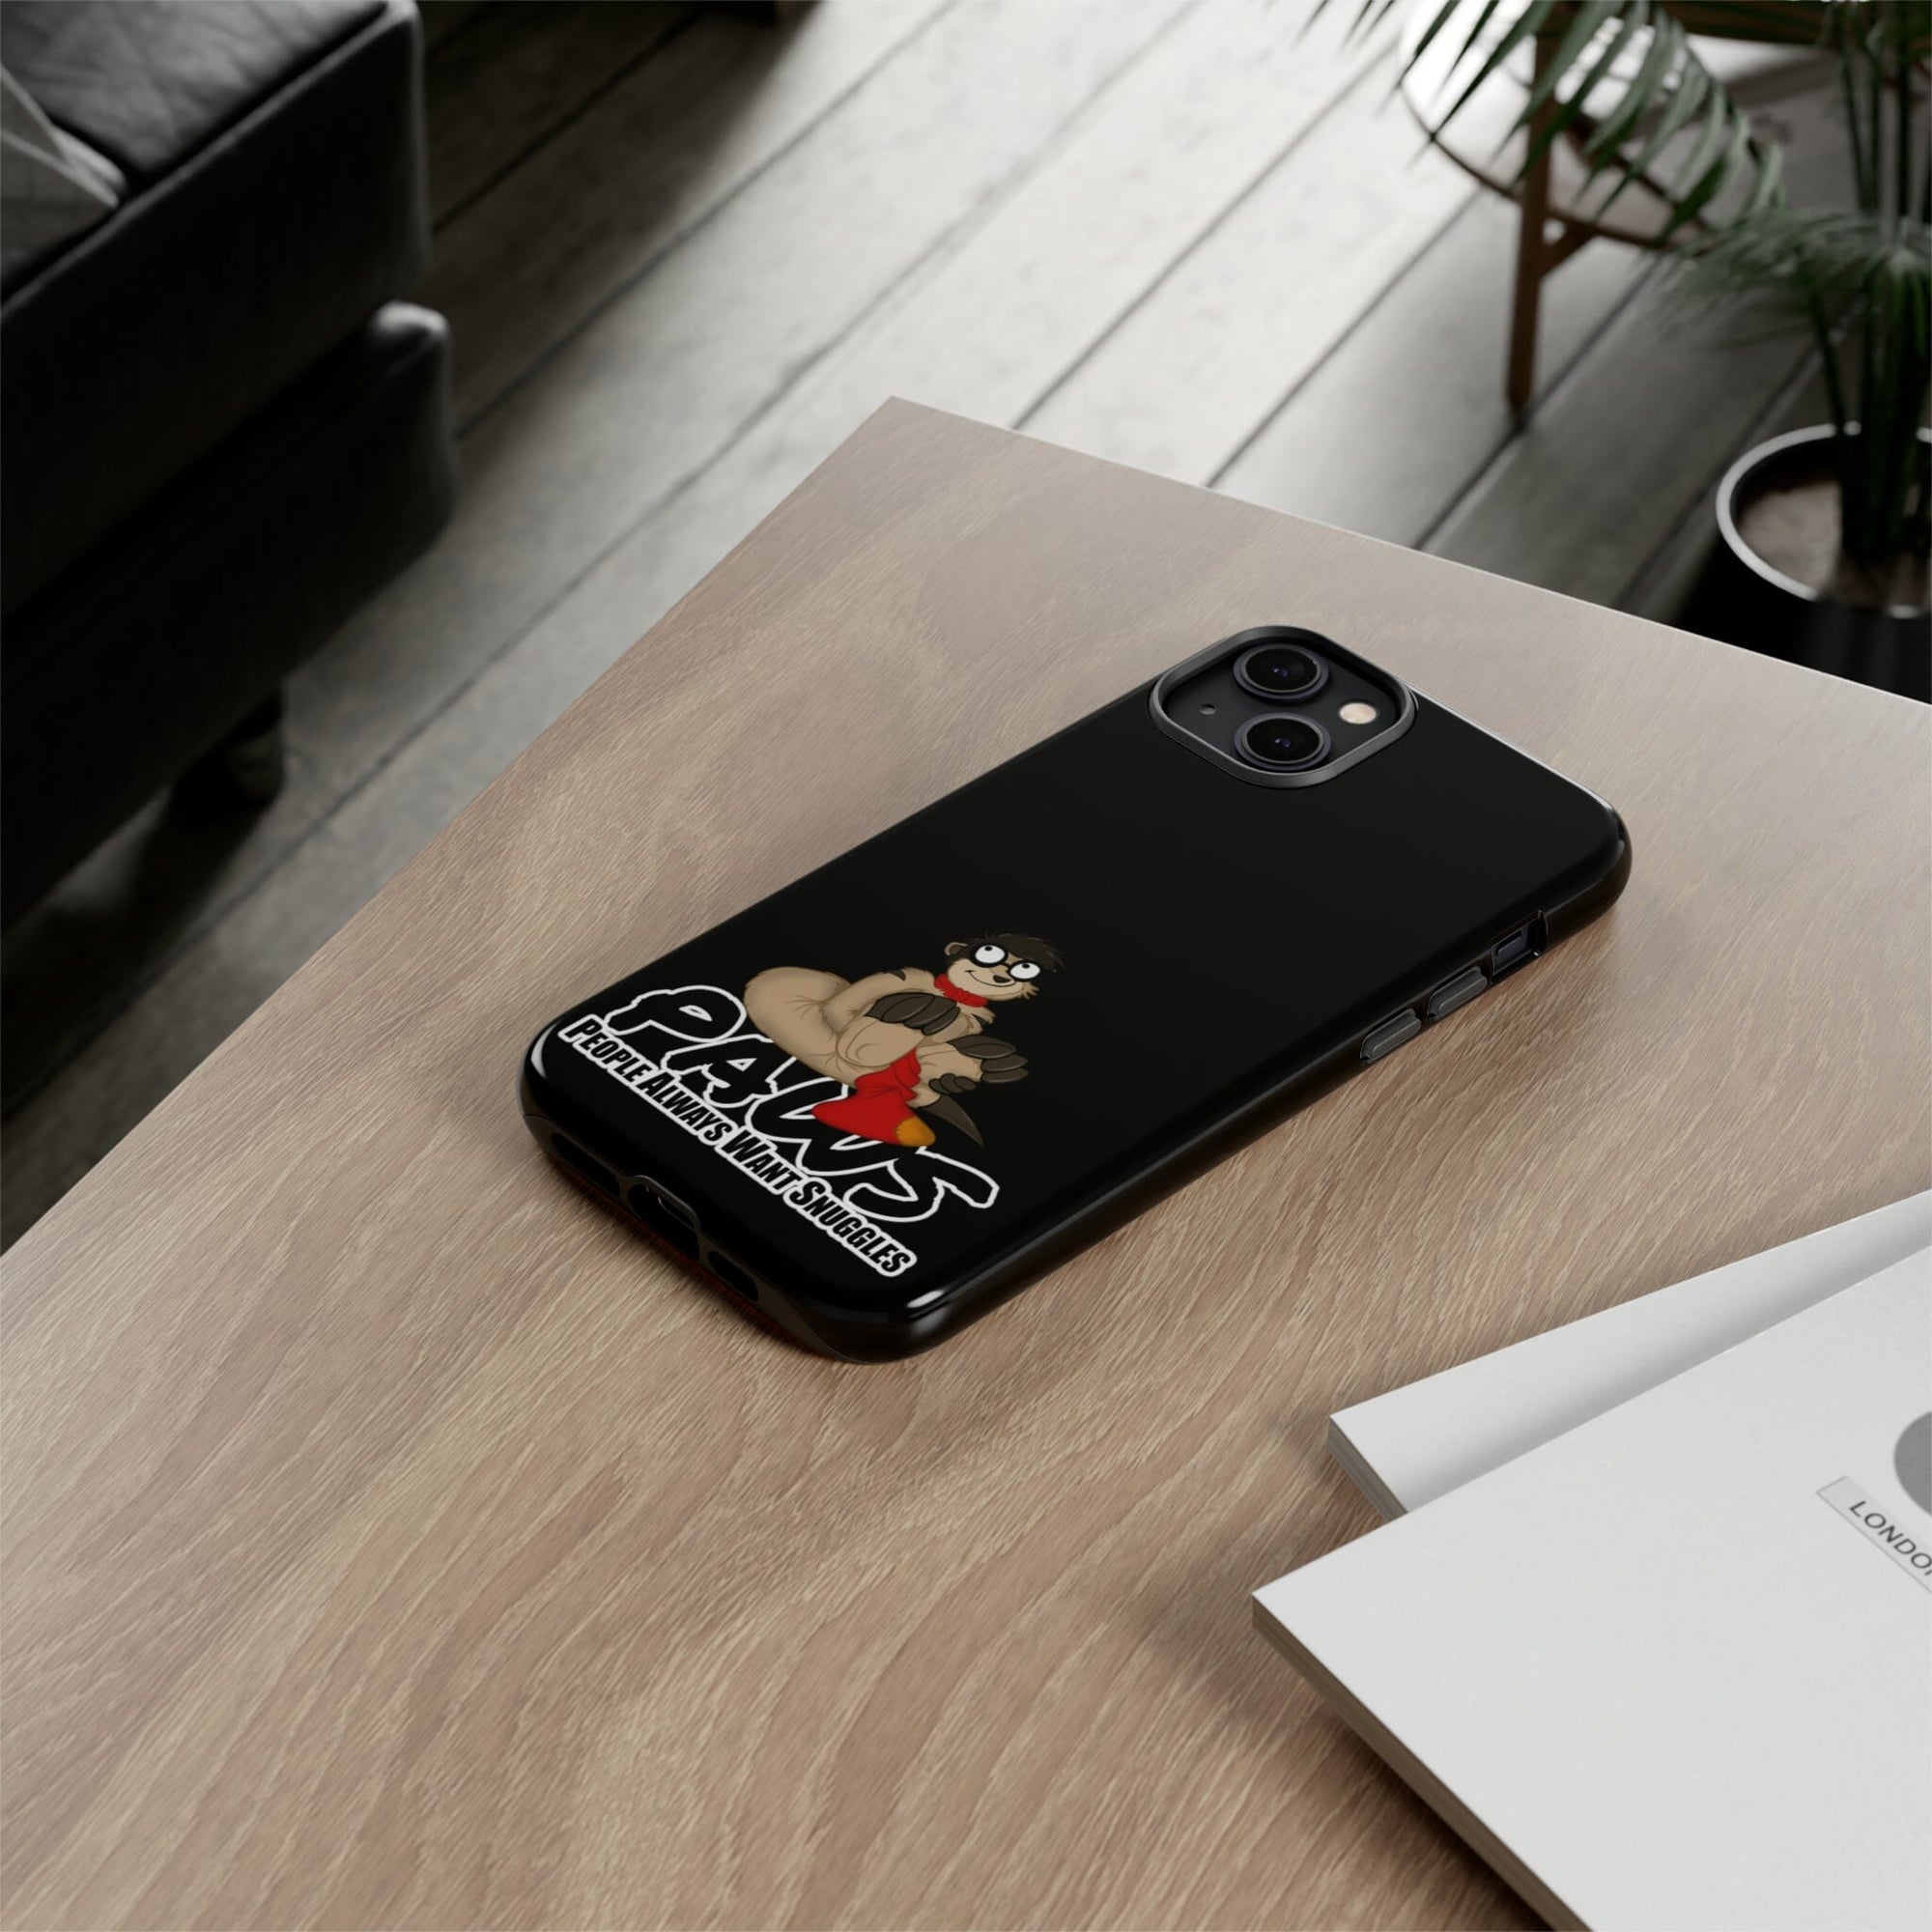 Thabo Meerkat - PAWS - Phone Case Phone Case Thabo Meerkat 